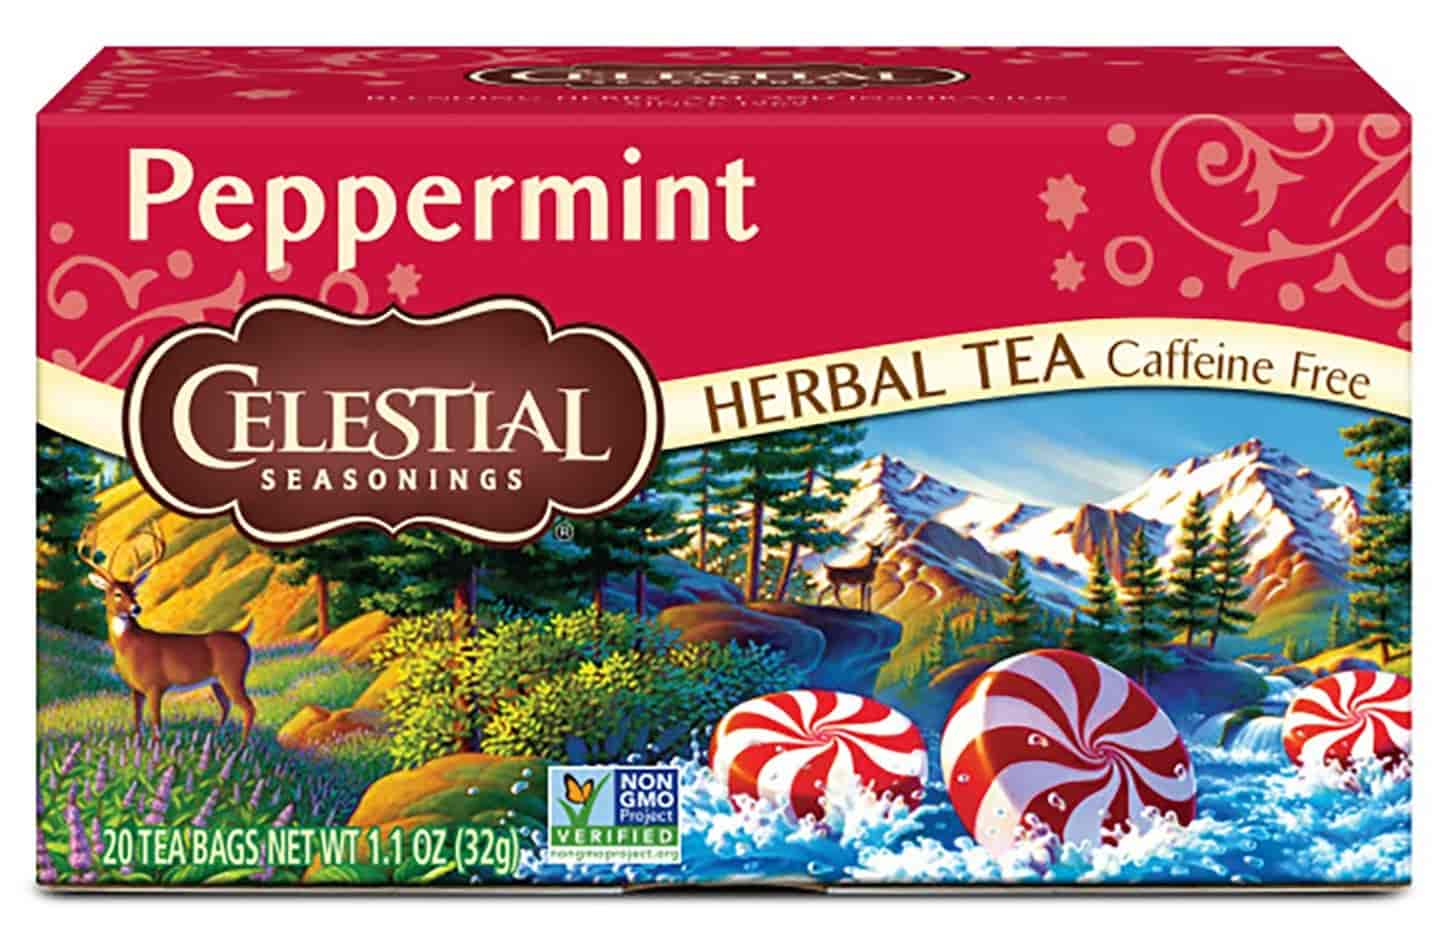 Peppermint Tea Product